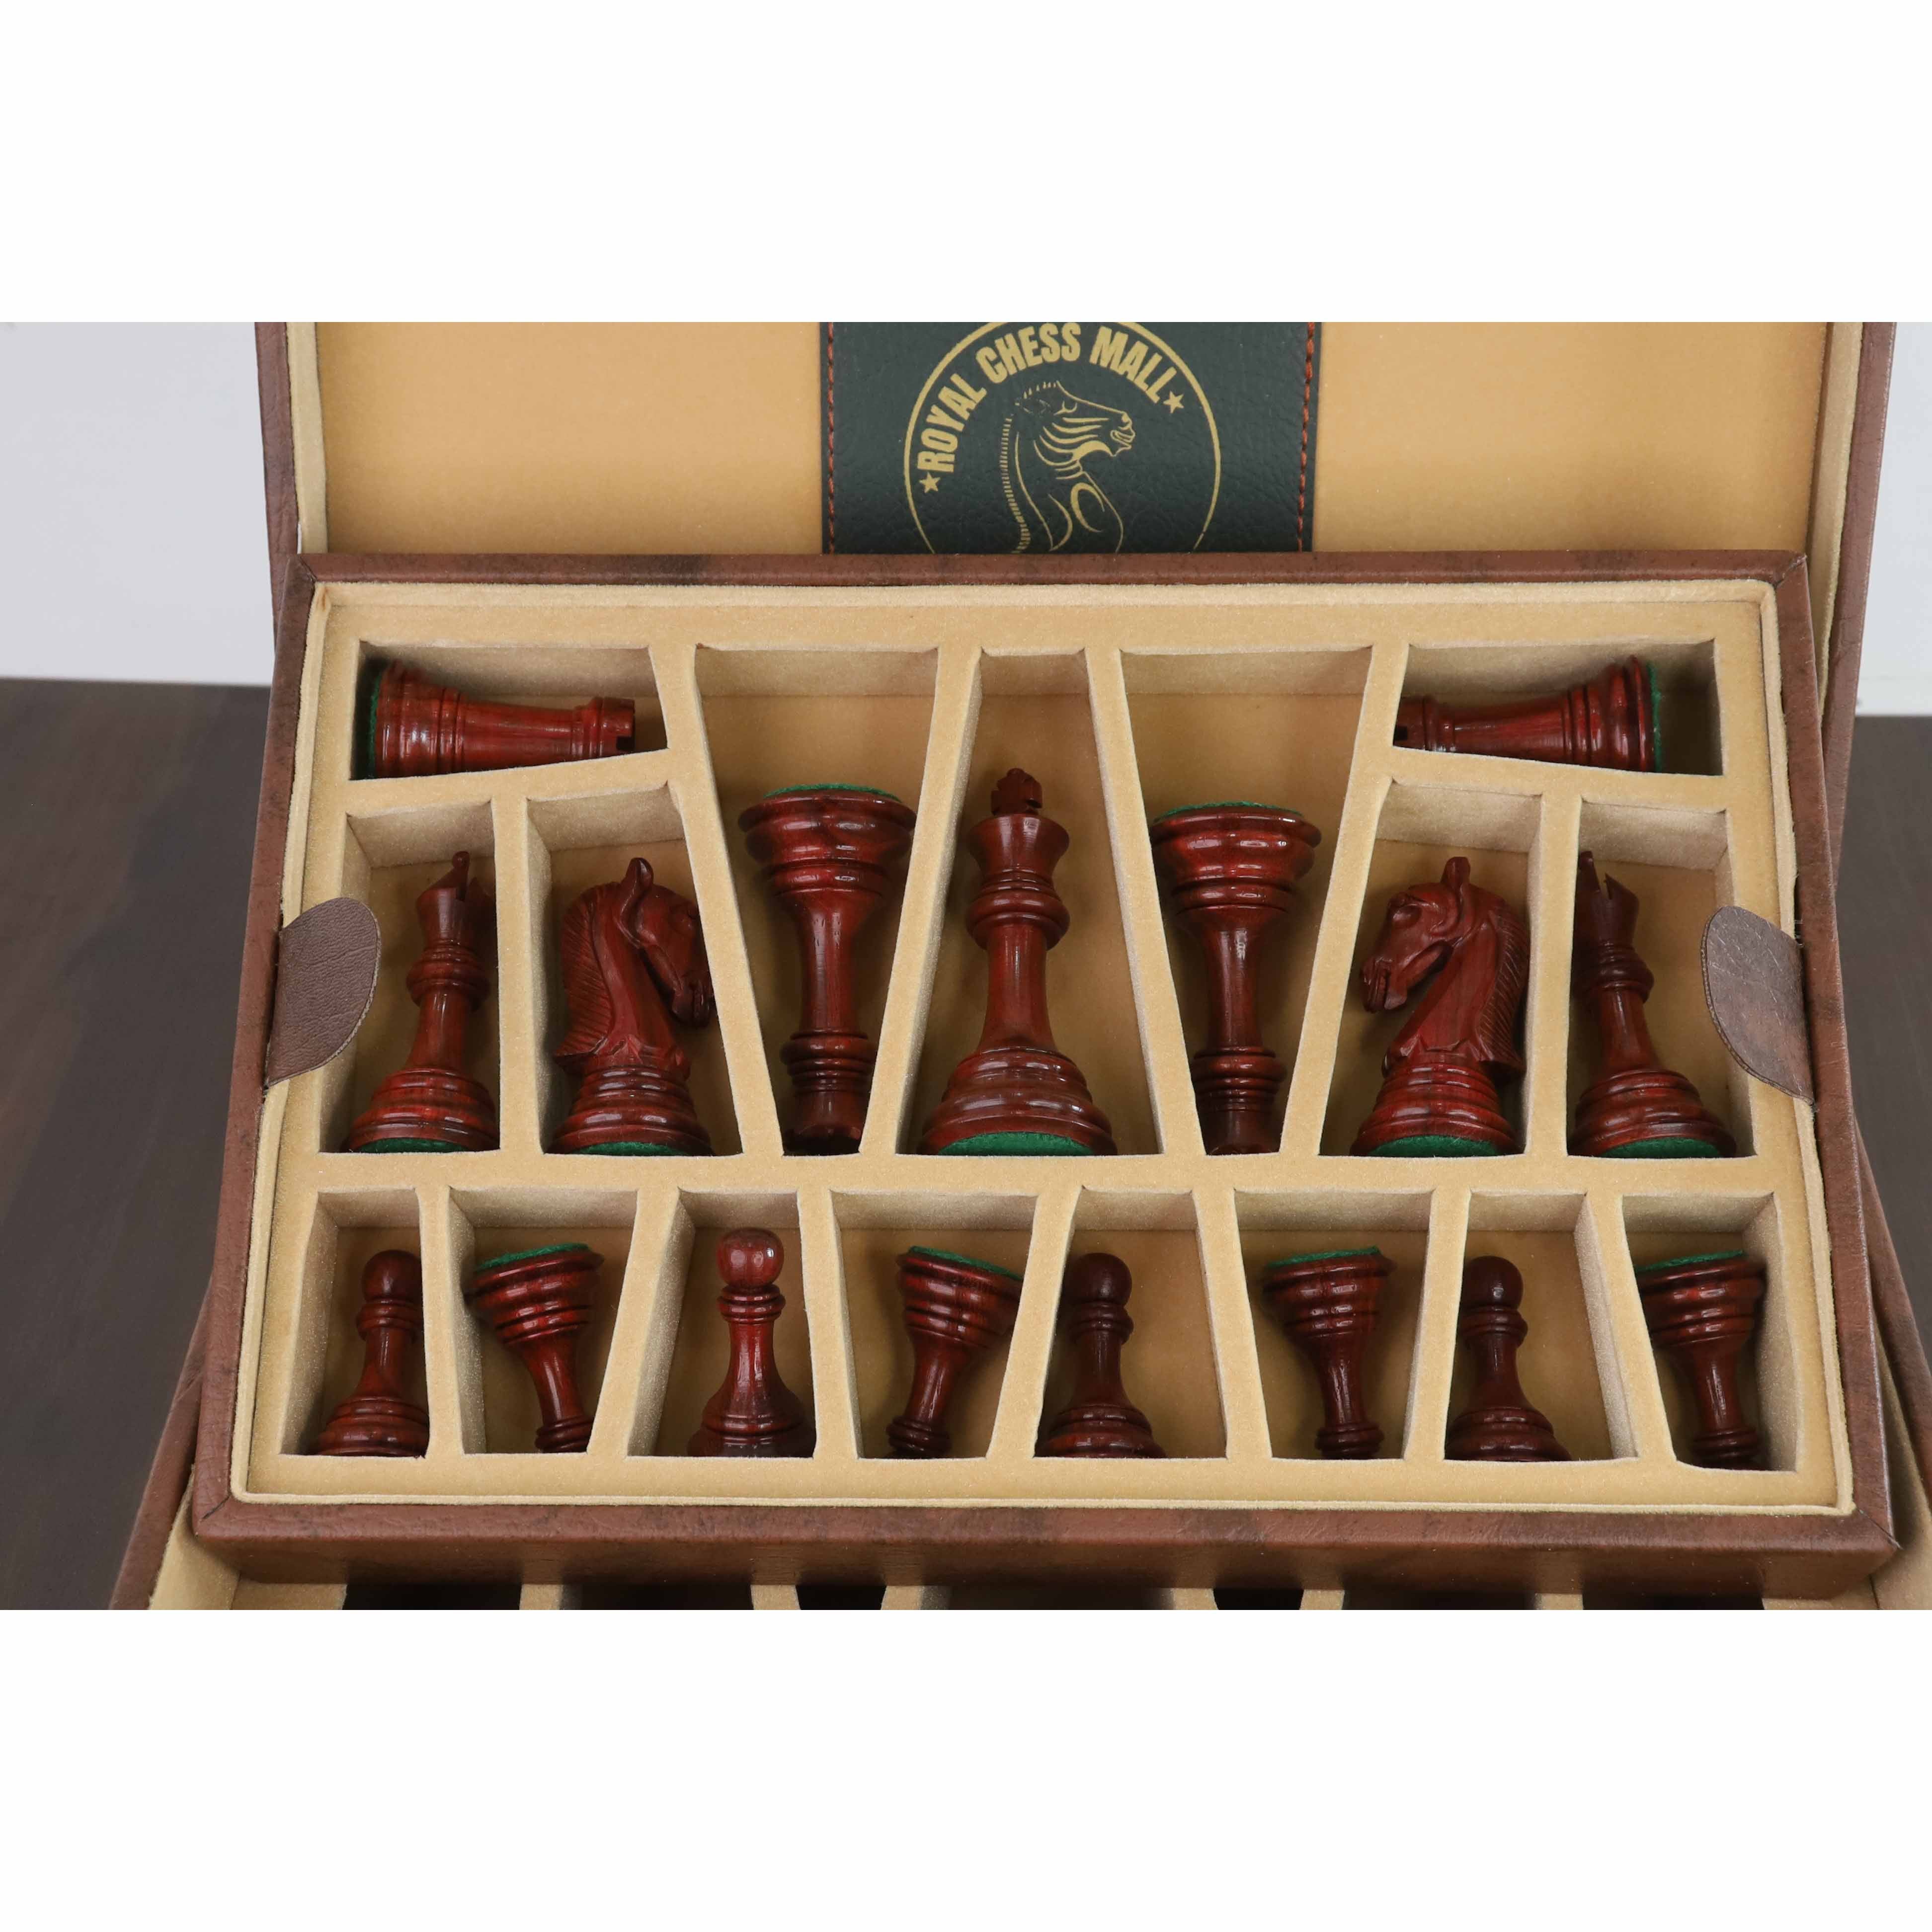 Signature Leatherette Coffer Storage Box - Tan Brown - Chess Pieces upto 4"